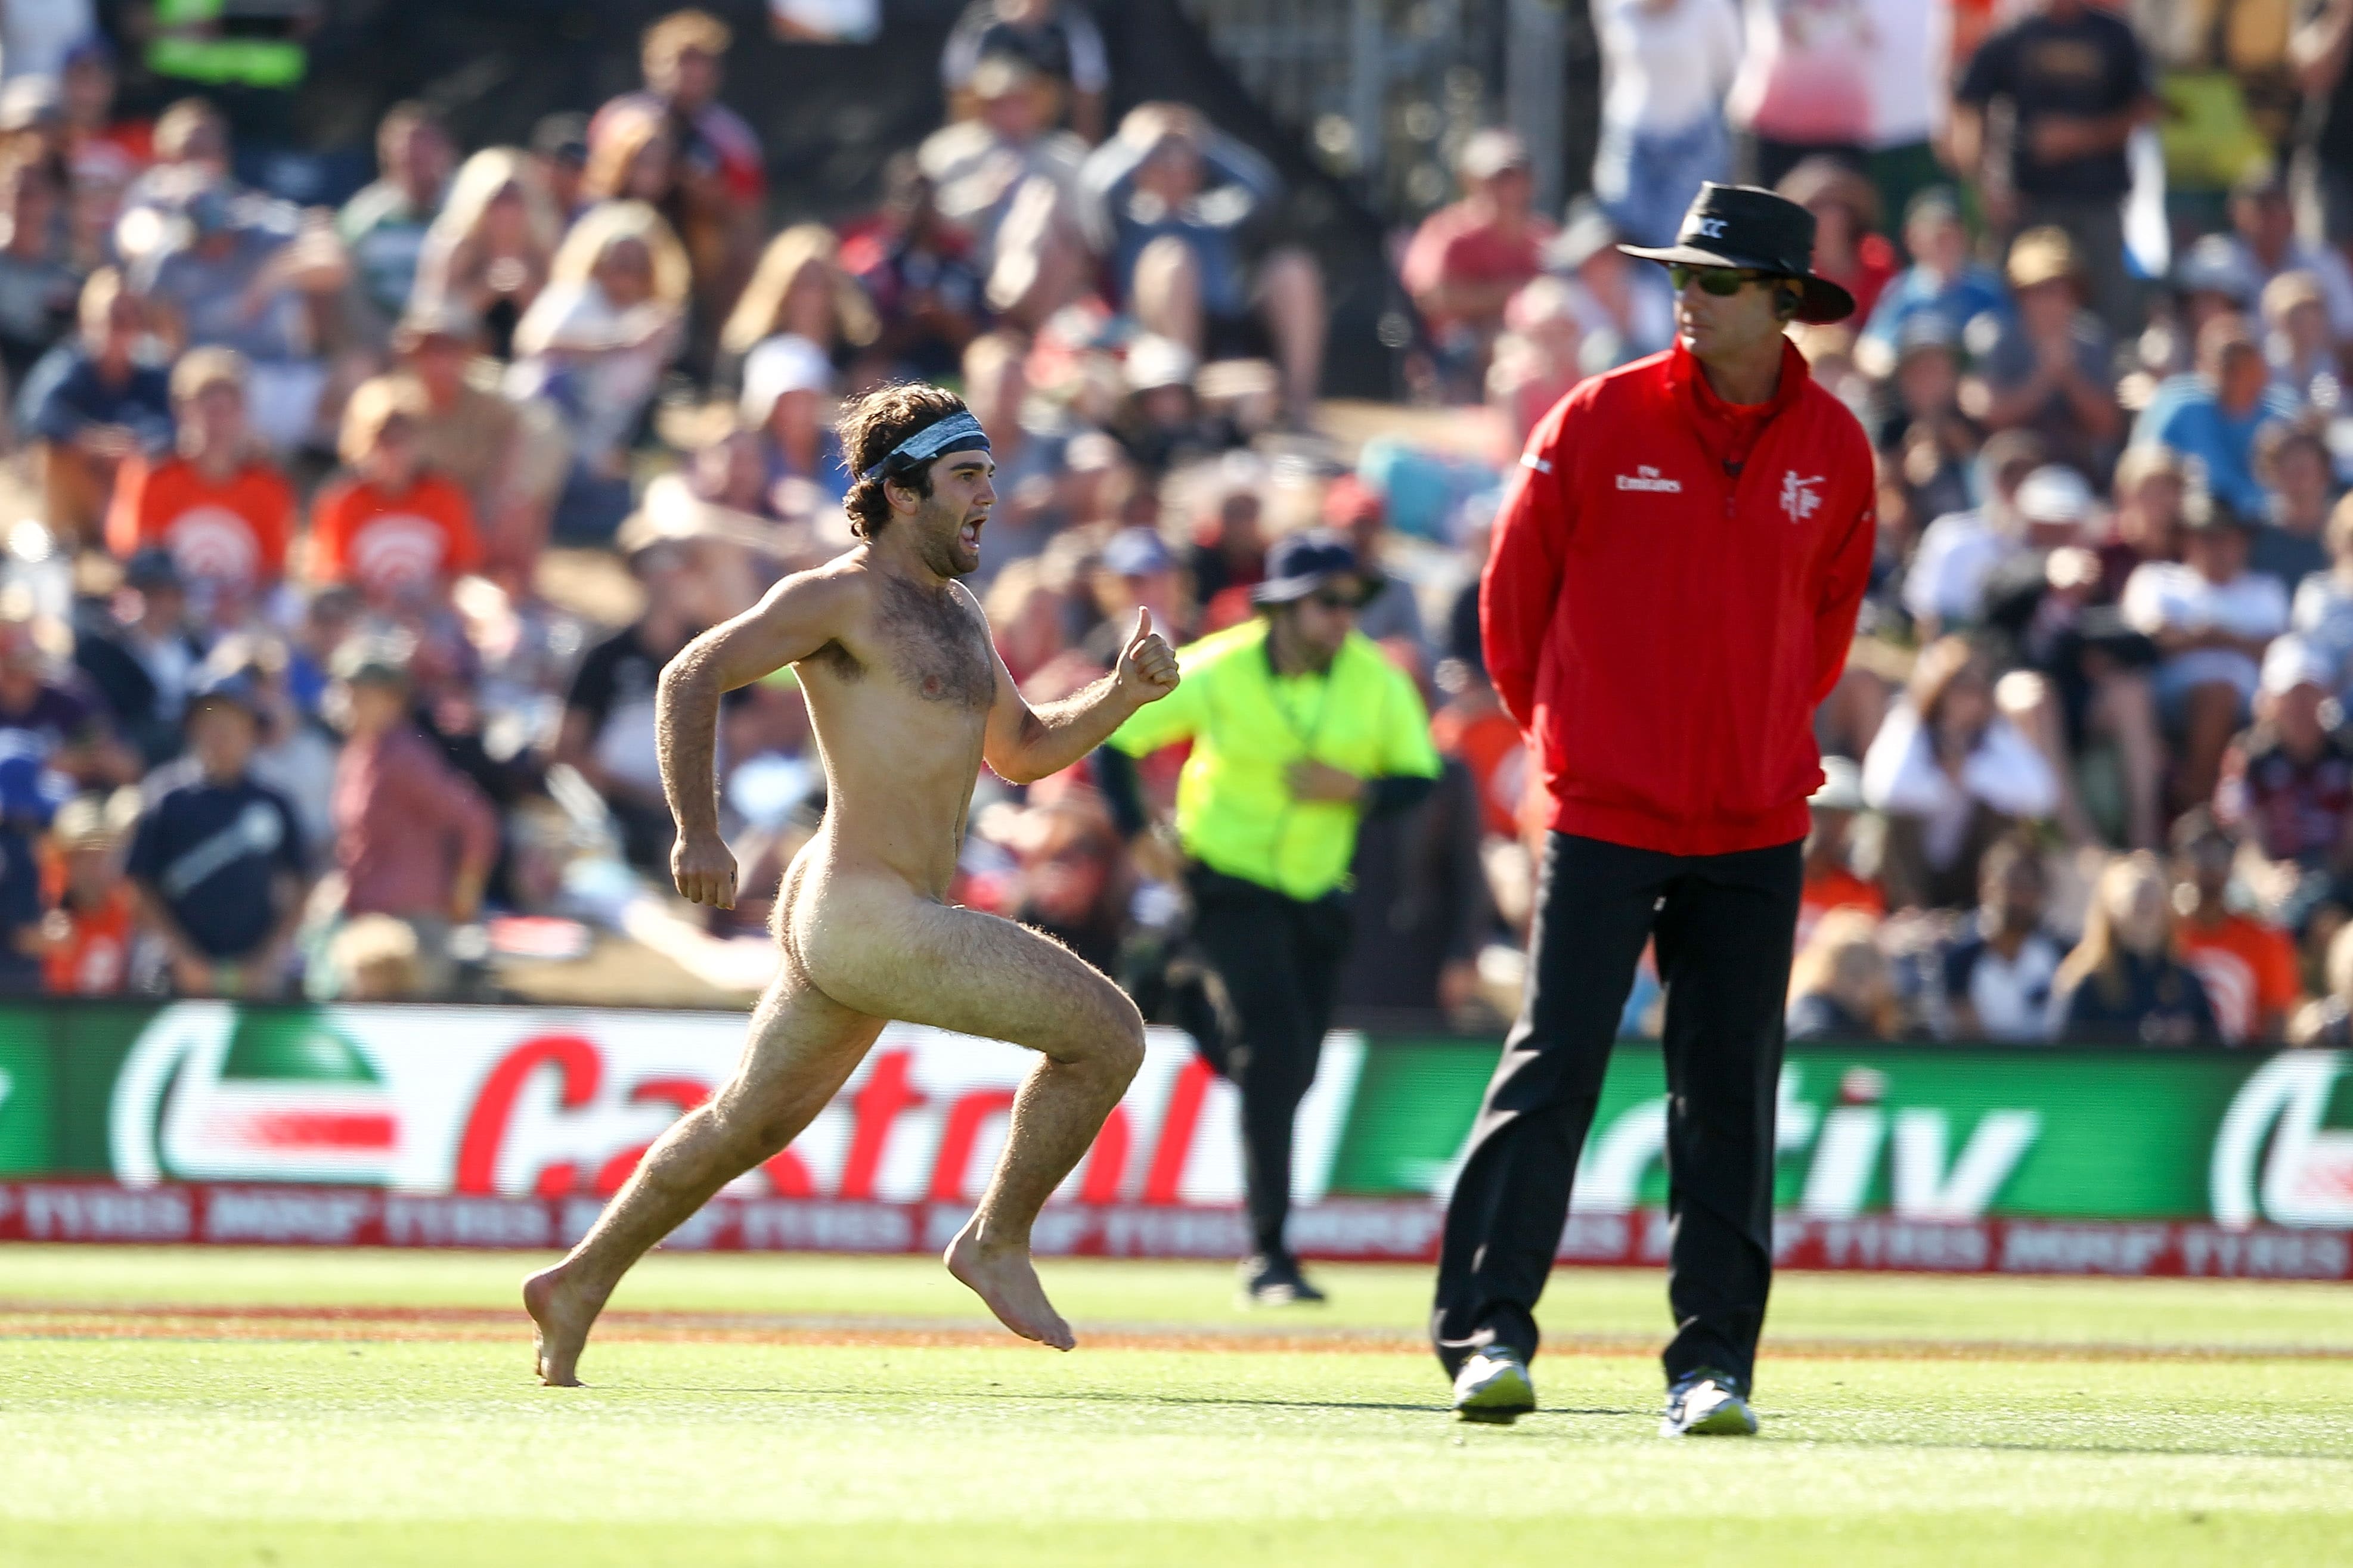 ICC Cricket World Cup 2015: Streaker runs across pitch in England vs Scotland Pool A ...